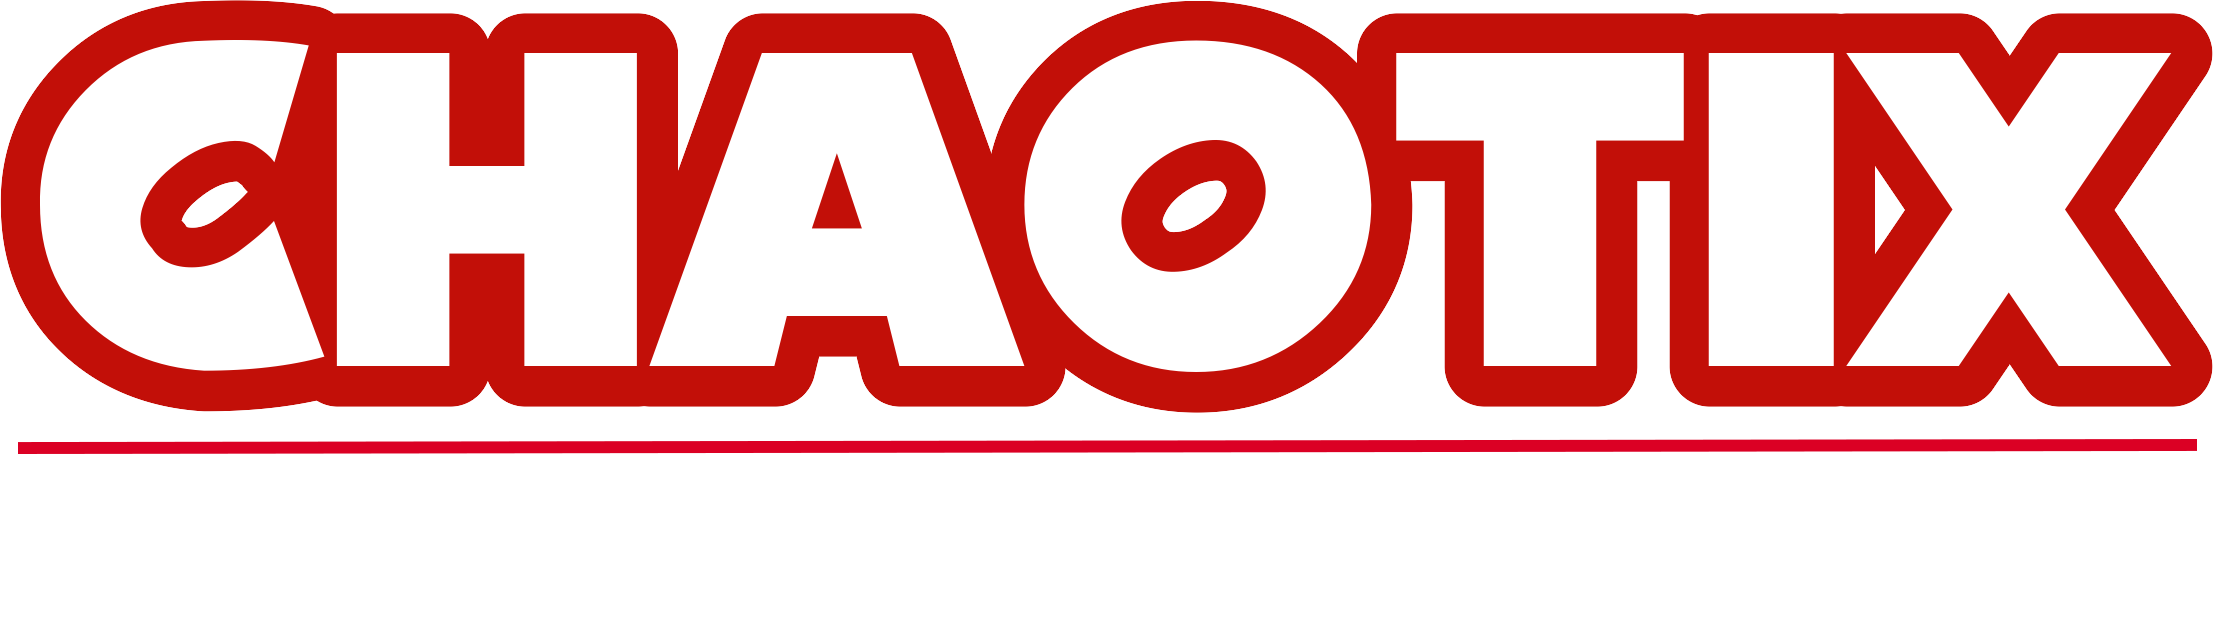 Chaotix Game Development logo